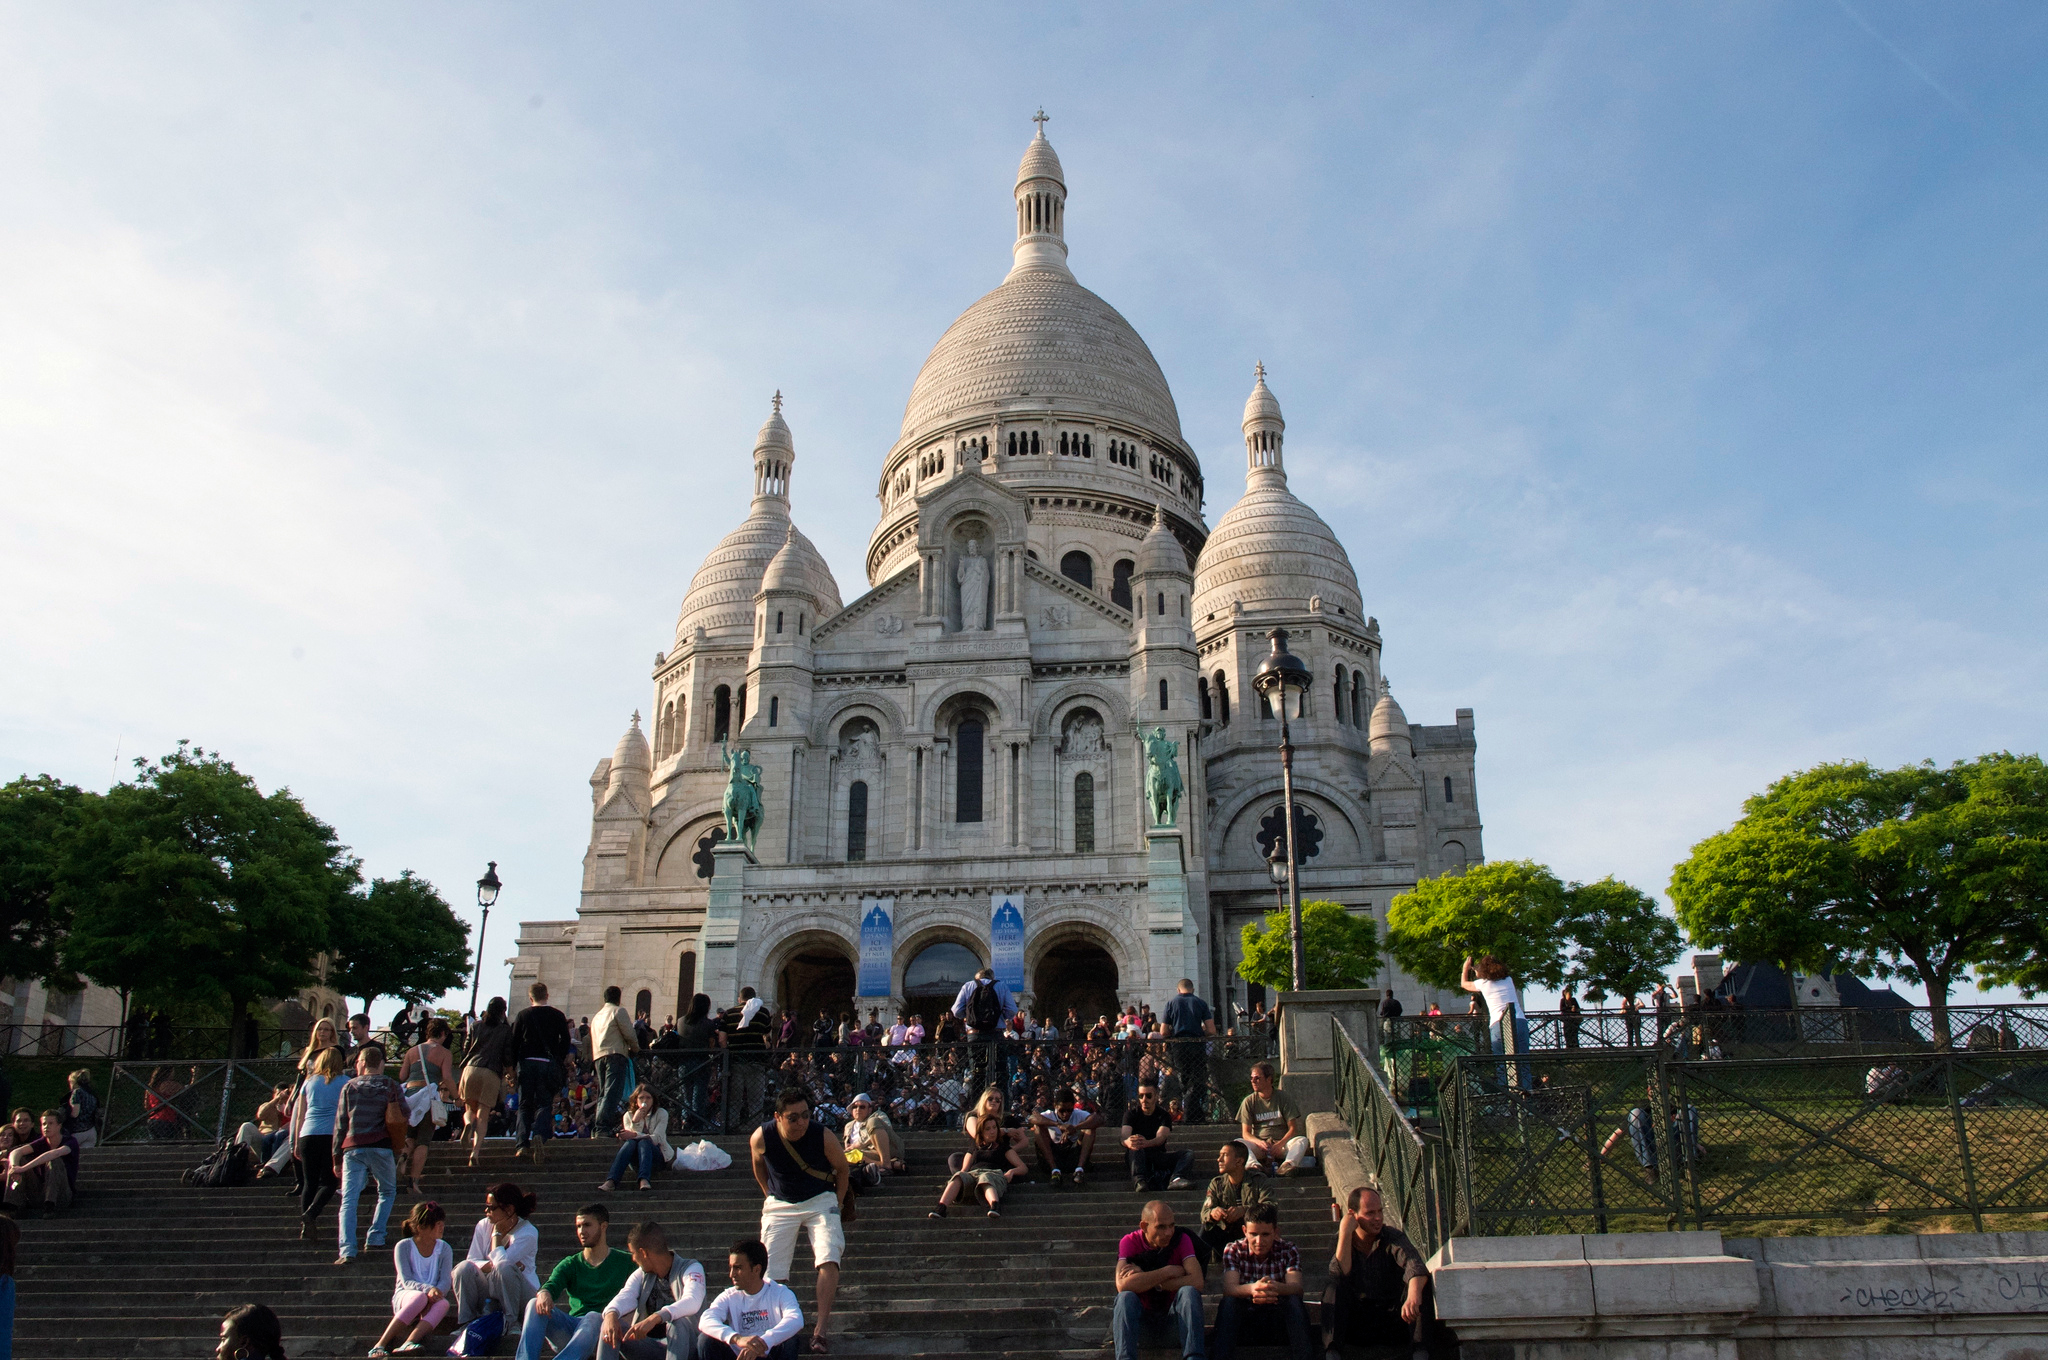 Basilica of the Sacré Coeur in Paris. Photo by alphacityguides